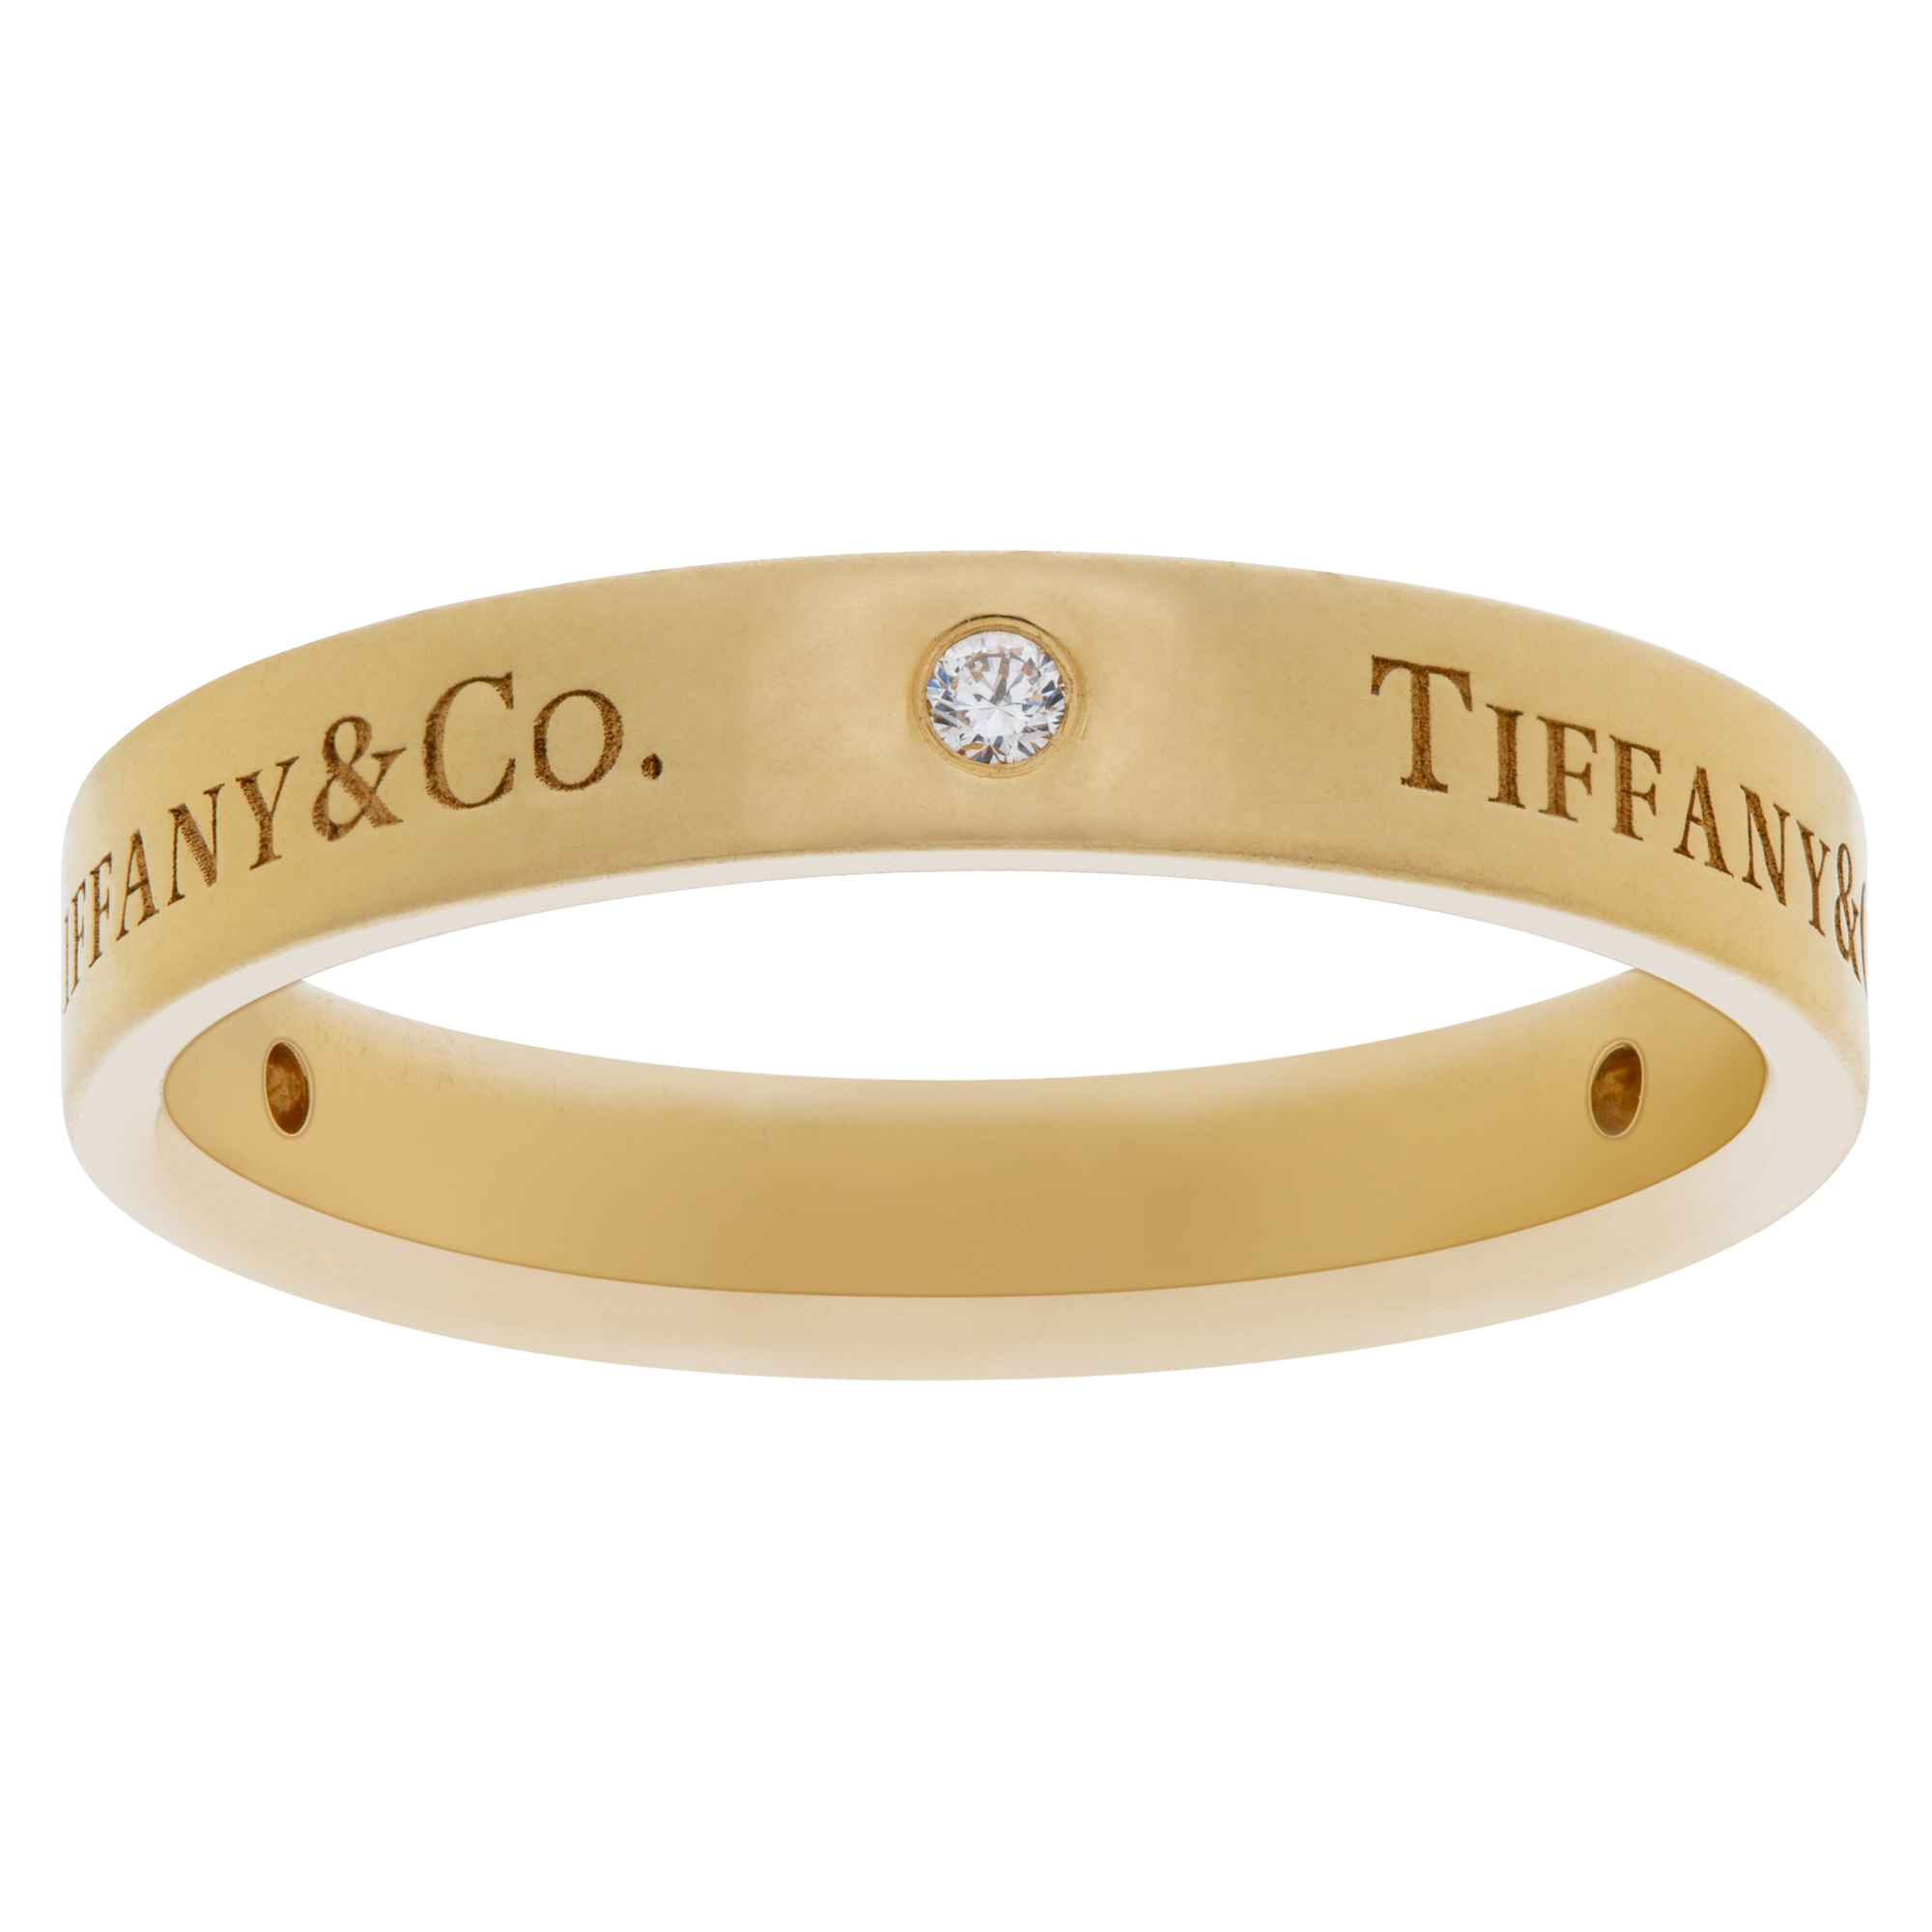 Tiffany & Co. 18k gold band ring with three round brilliant diamonds